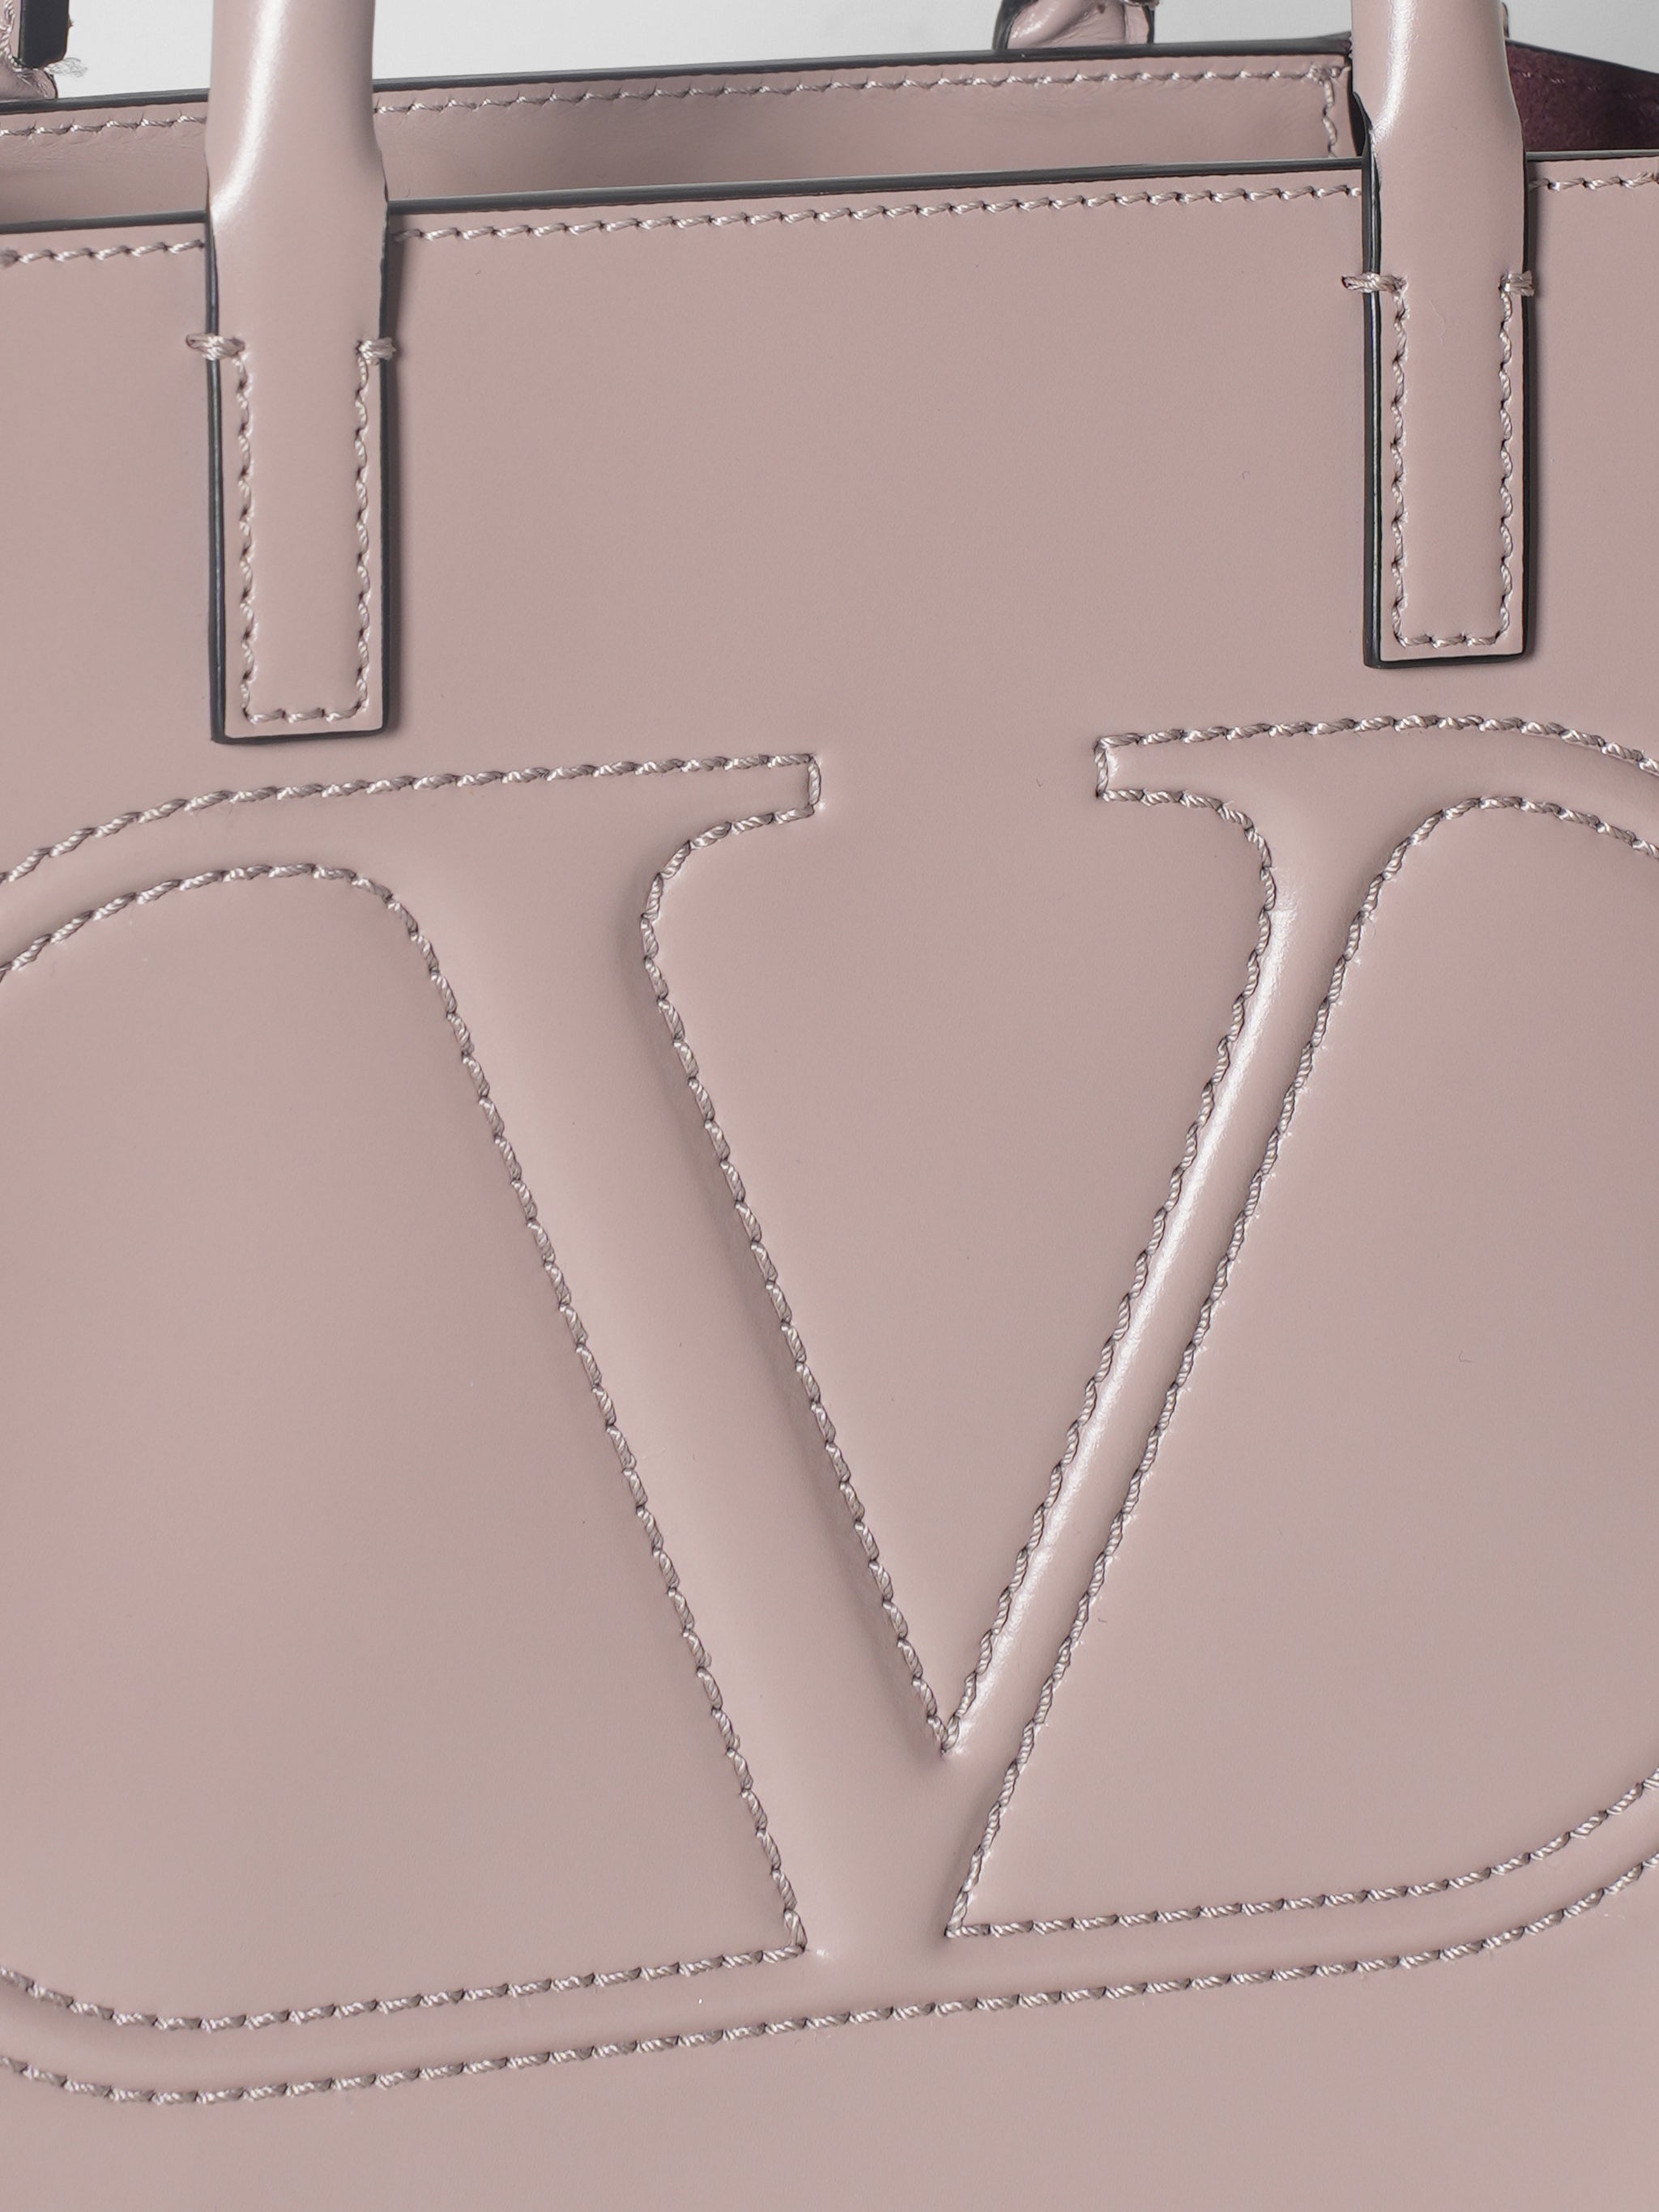 New Valentino Garavani V Logo Leather Handbag